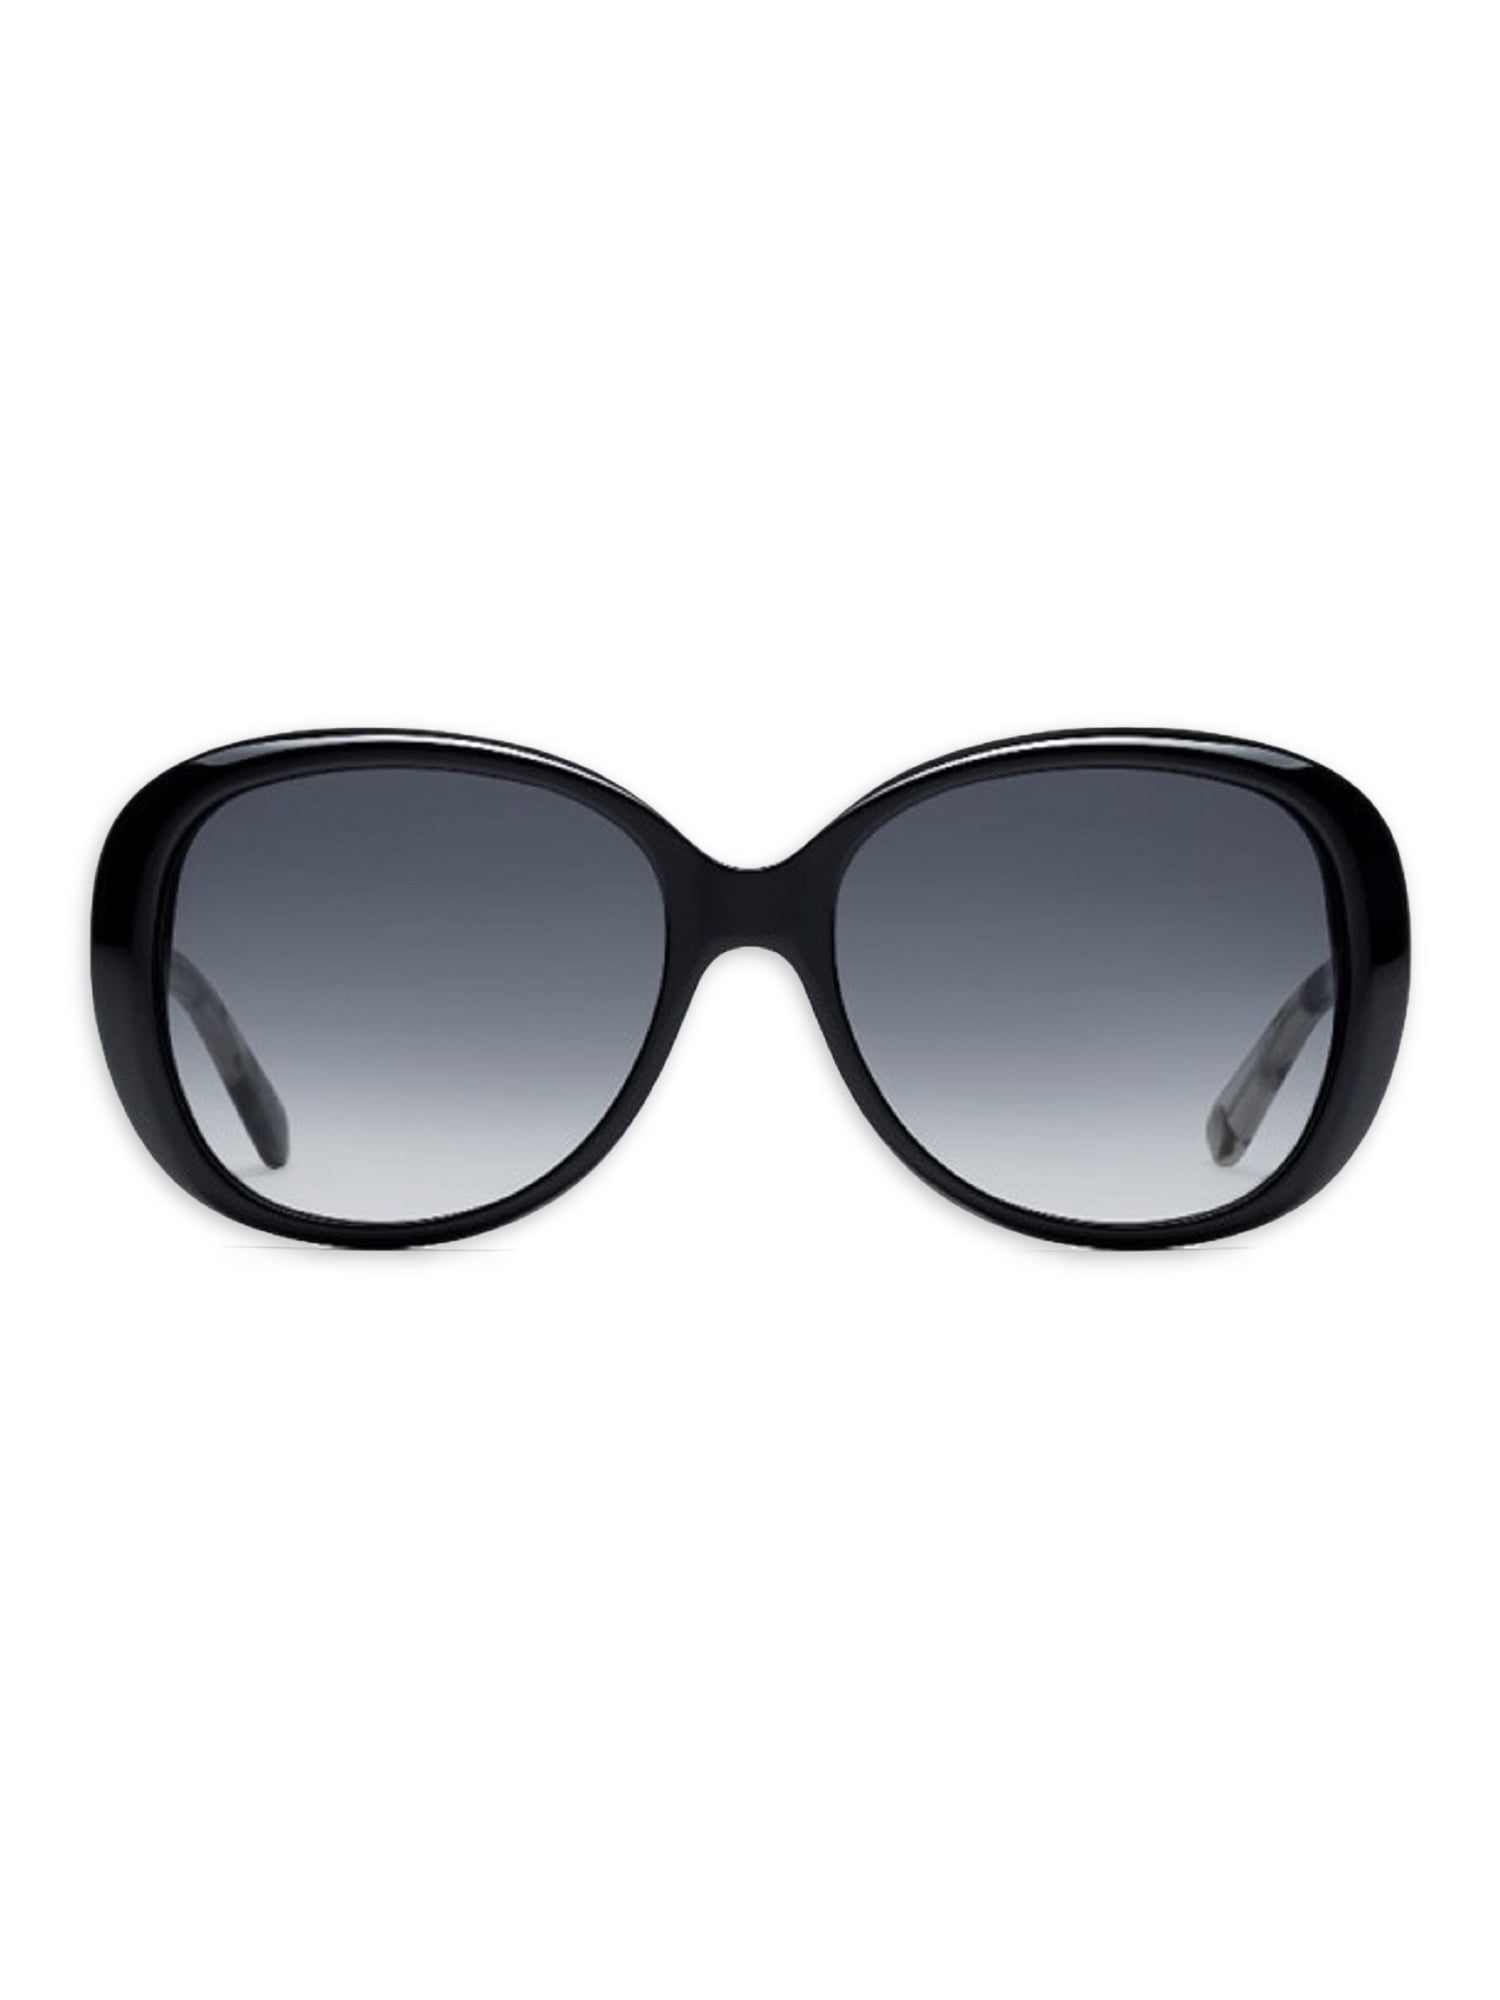 Juicy Couture Adult Female Square Sunglasses JU598S 